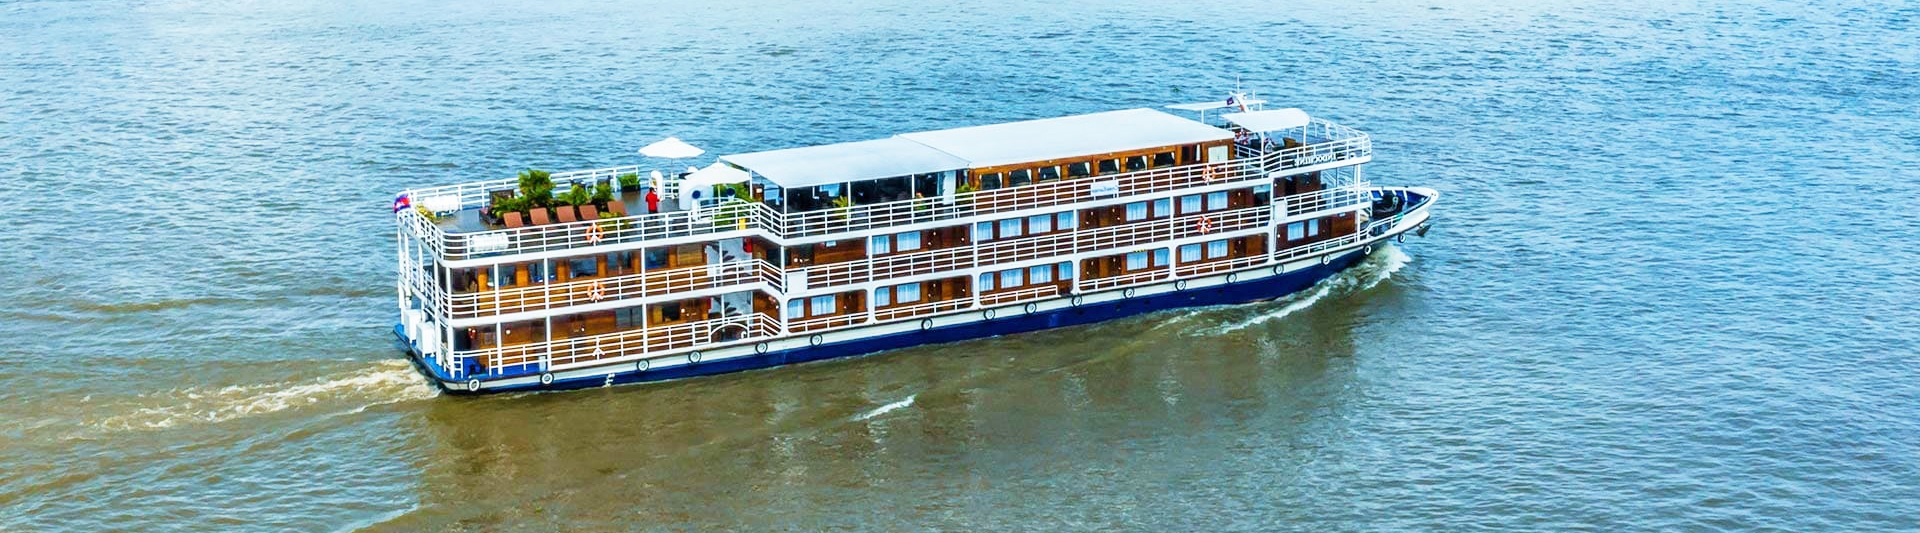 Irrawaddy River Cruises